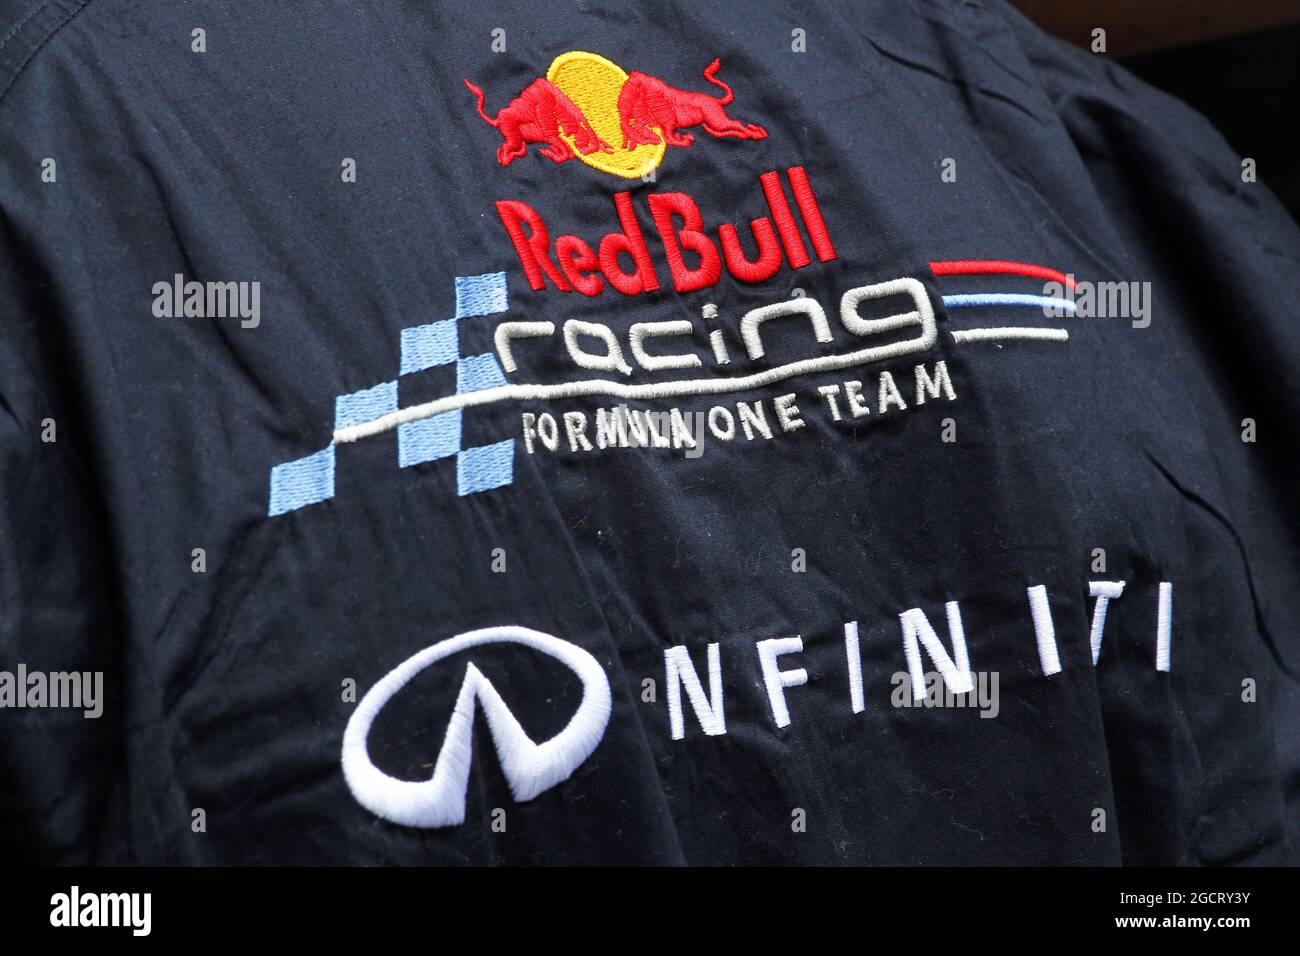 Red Bull Racing has announced Infiniti to be their title sponsor from 2013. Brazilian Grand Prix, Sunday 25th November 2012. Sao Paulo, Brazil. Stock Photo